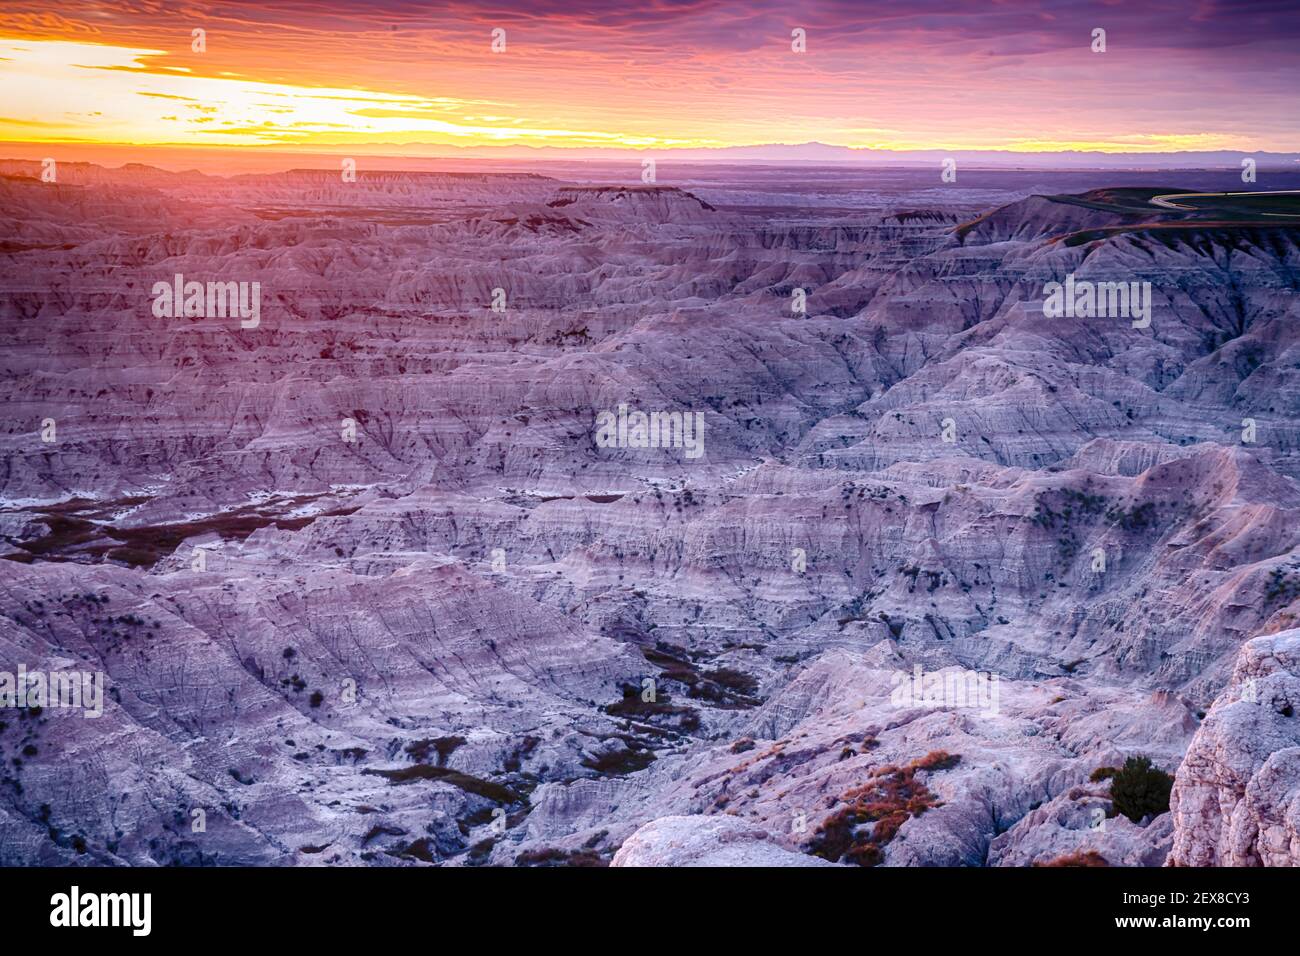 Badlands National Park landscape at Sunset in South Dakota Stock Photo